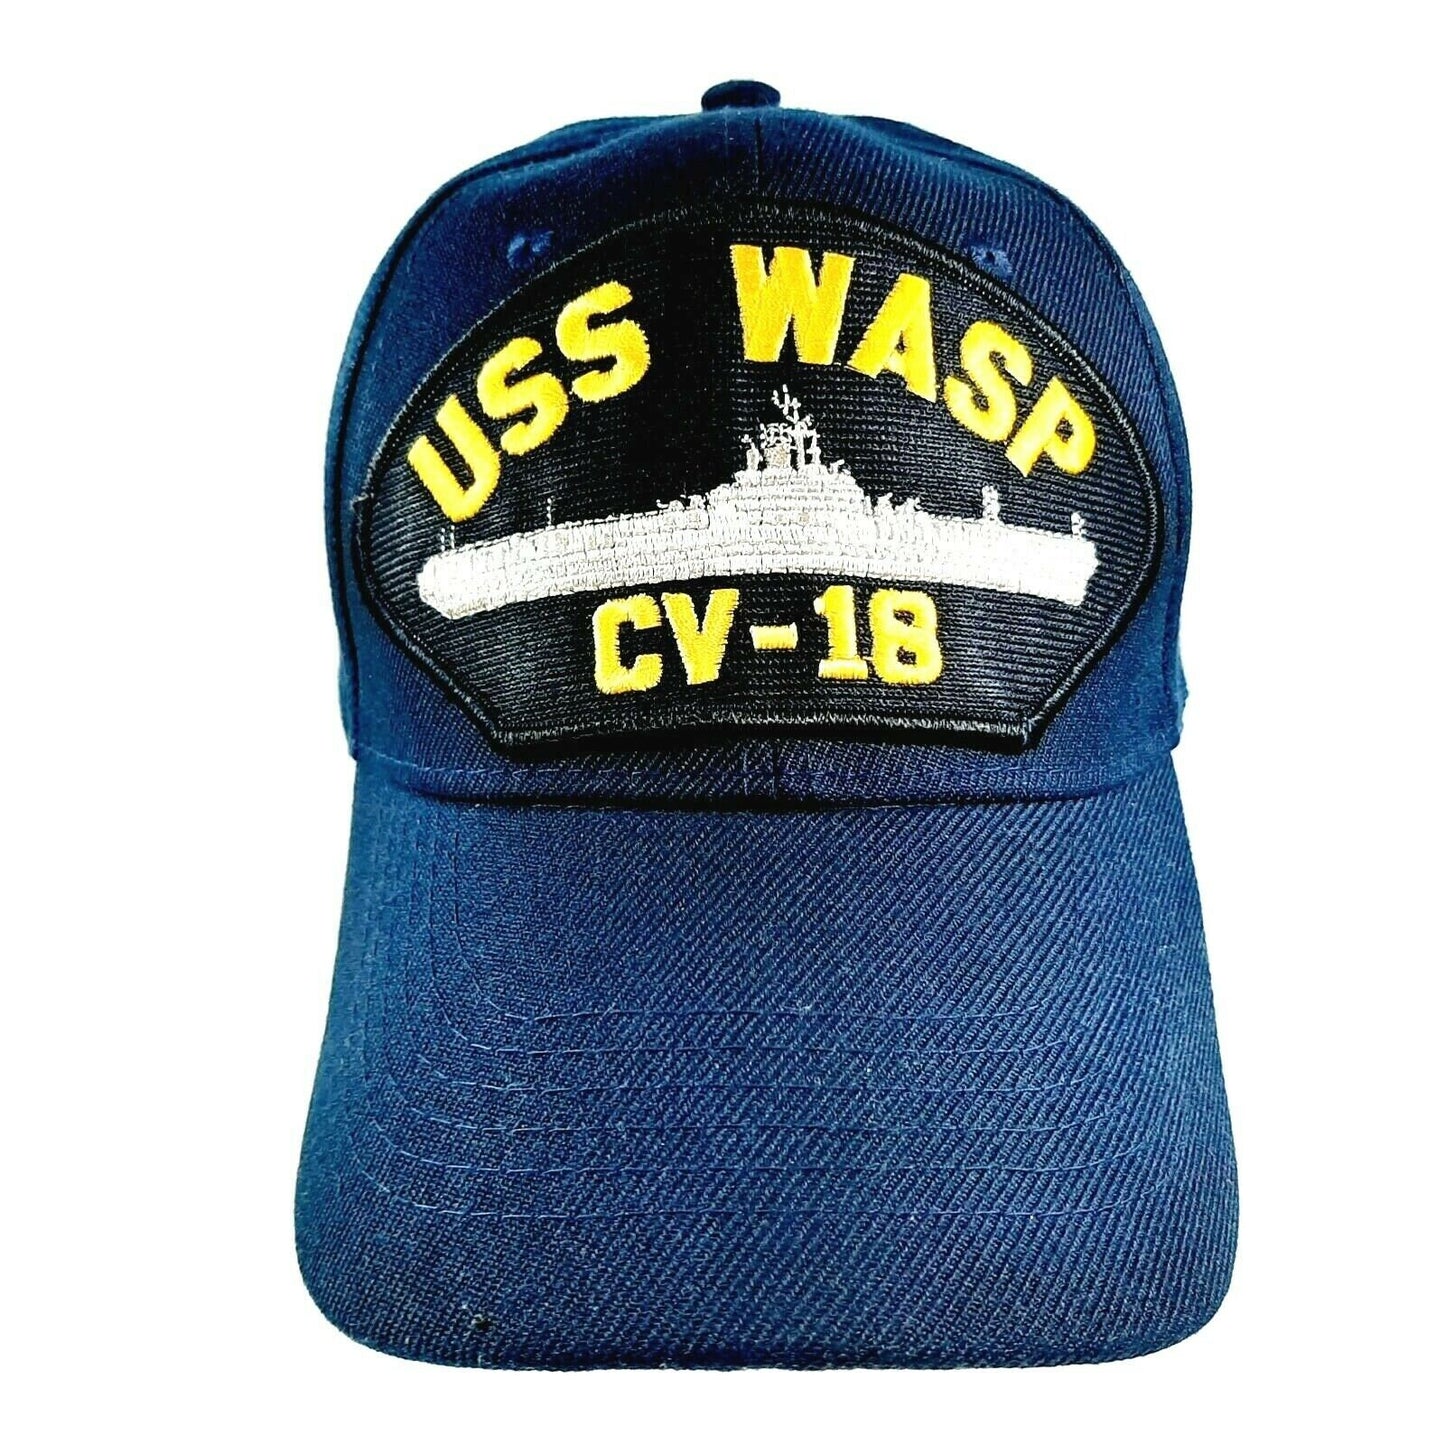 U.S. Navy USS Wasp CV-18 Men's Cap Patch Hat Navy Blue Acrylic